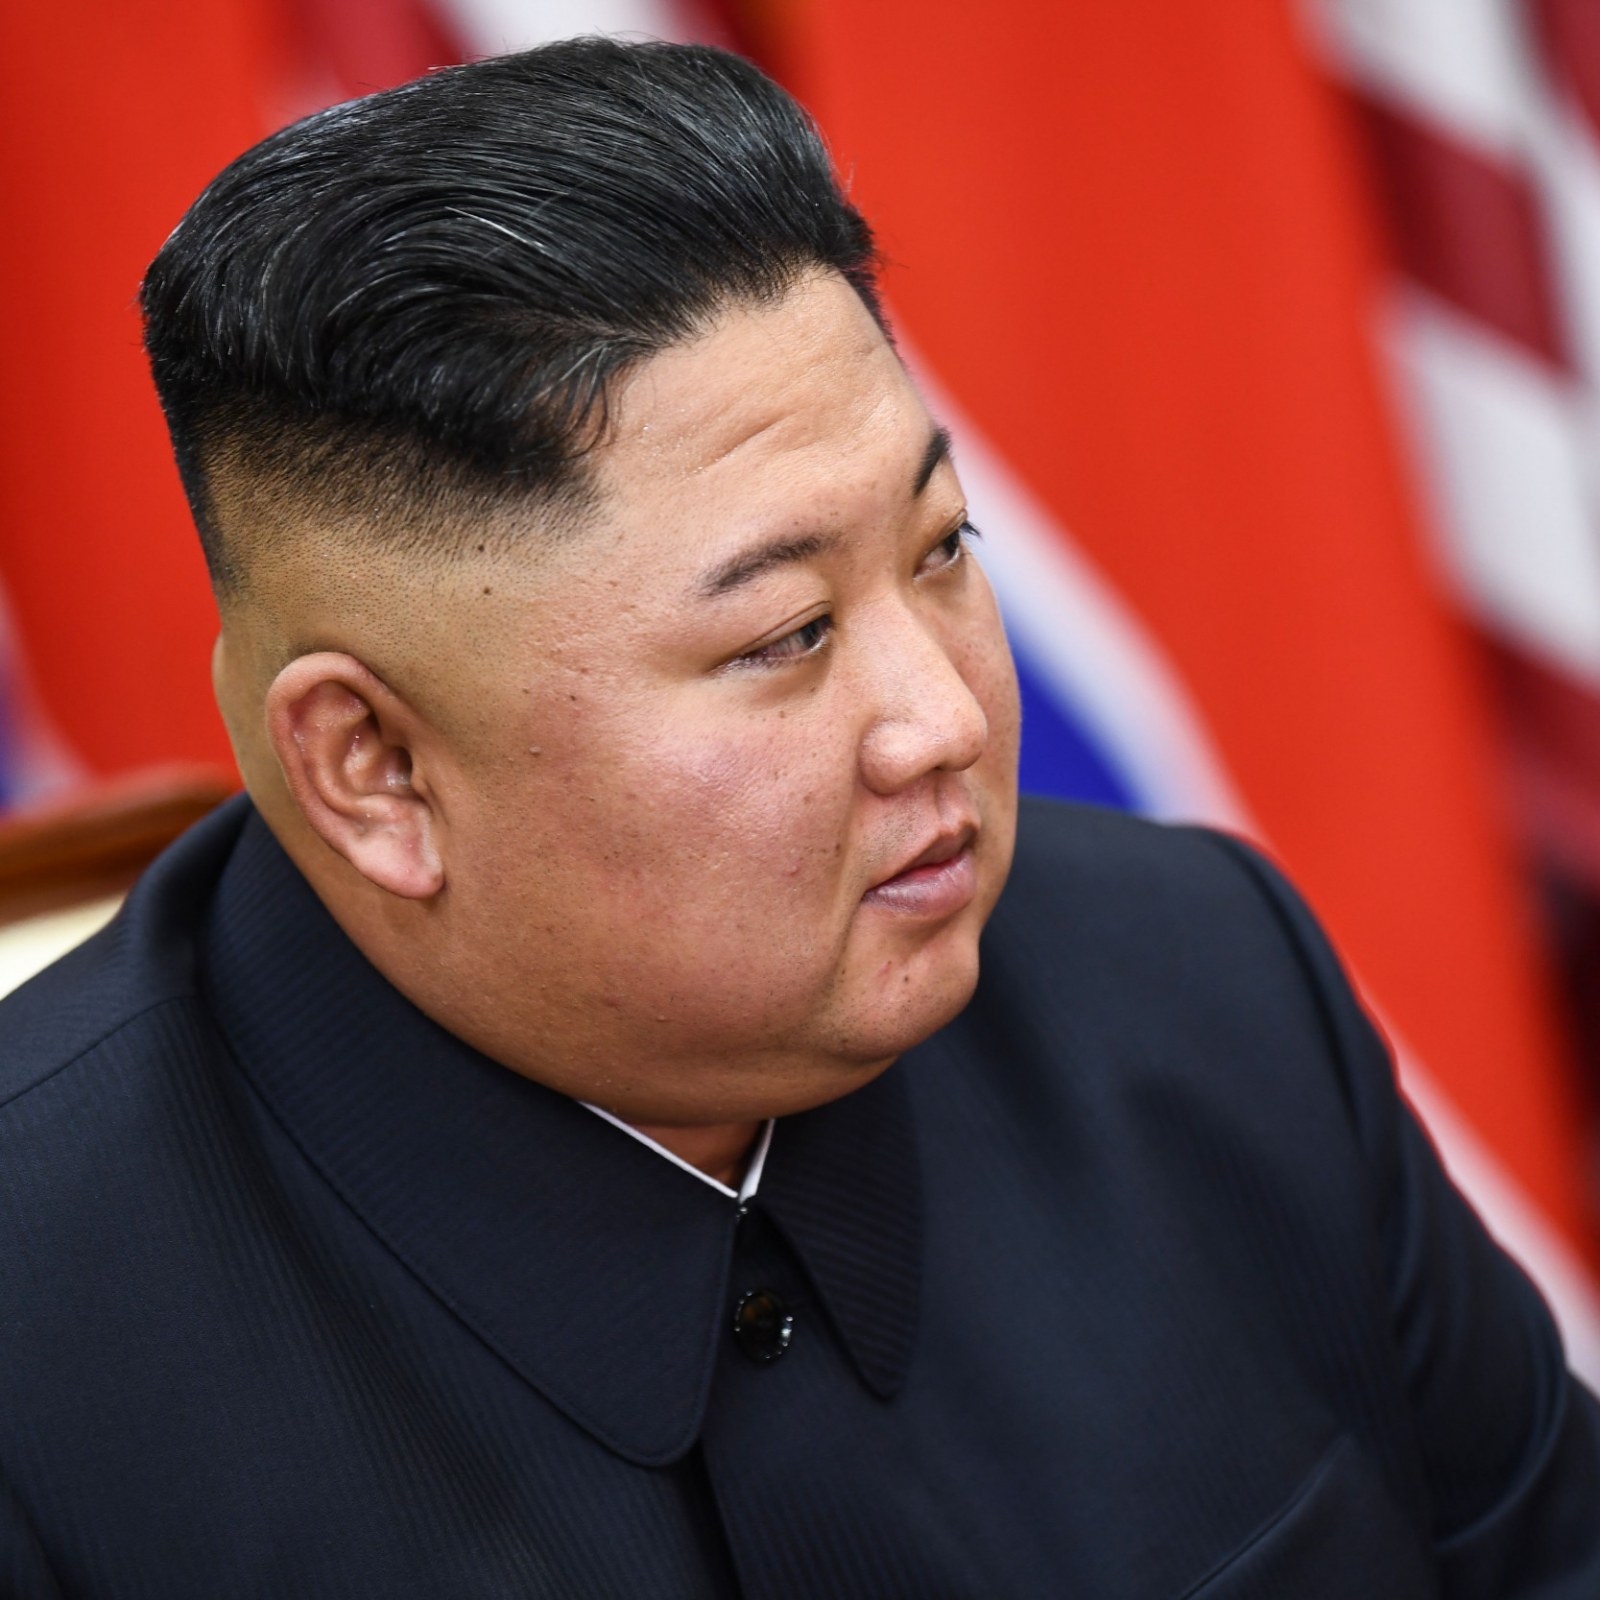 north-koreas-leader-kim-jong-un.jpg